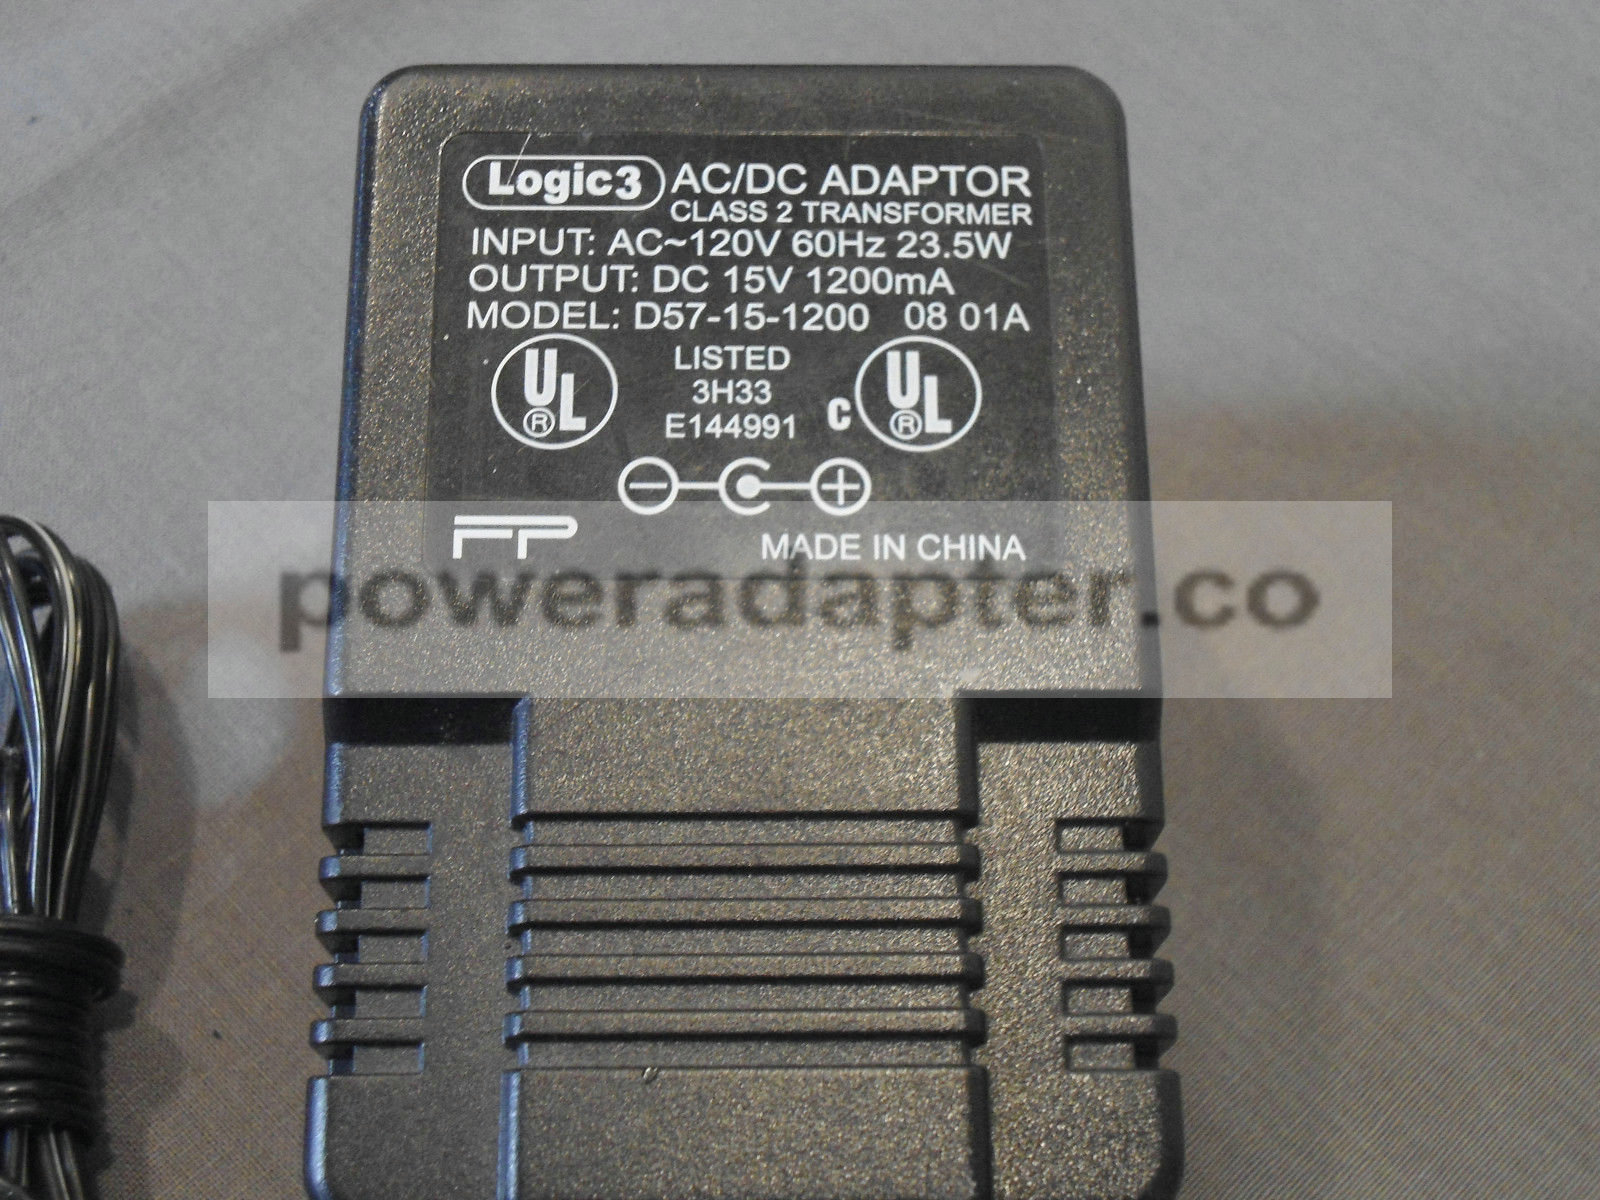 Logic3 AC/DC Adapter (D57-15-1200) 15V 1200mA Class 2 Transformer output: dc 15V 1200mA MPN: D57-15-1200 Model: D57